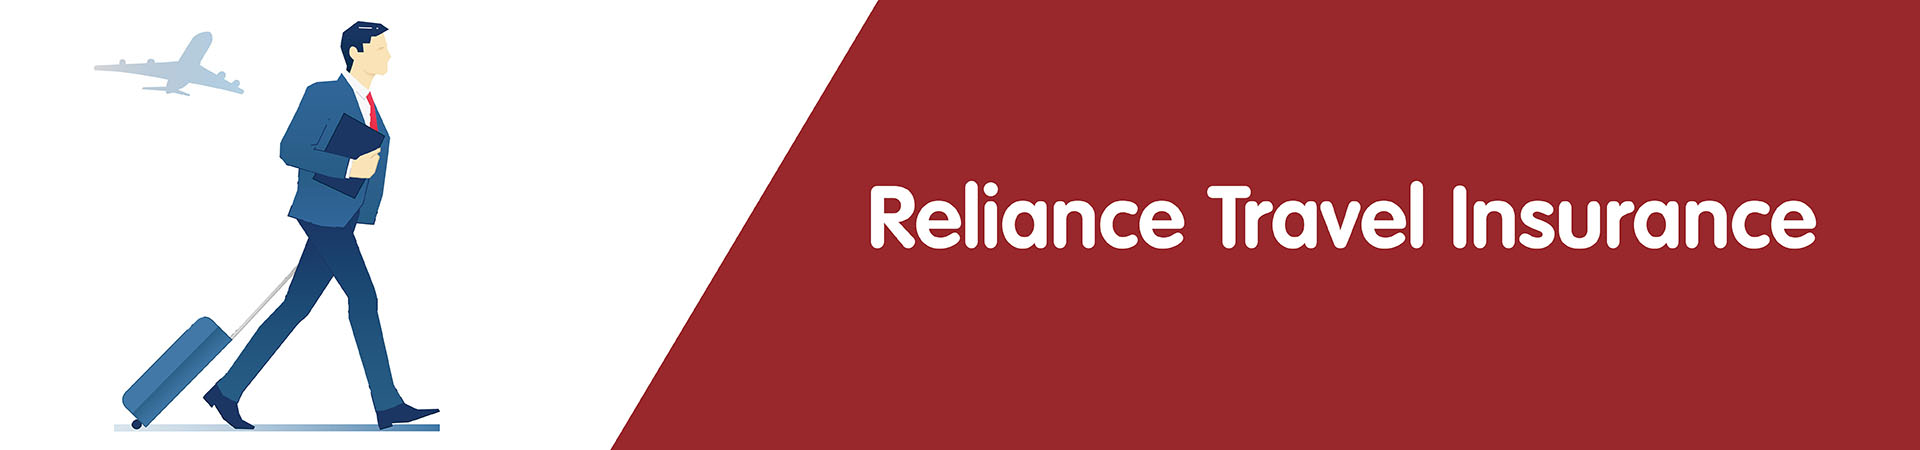 reliance travel insurance uk